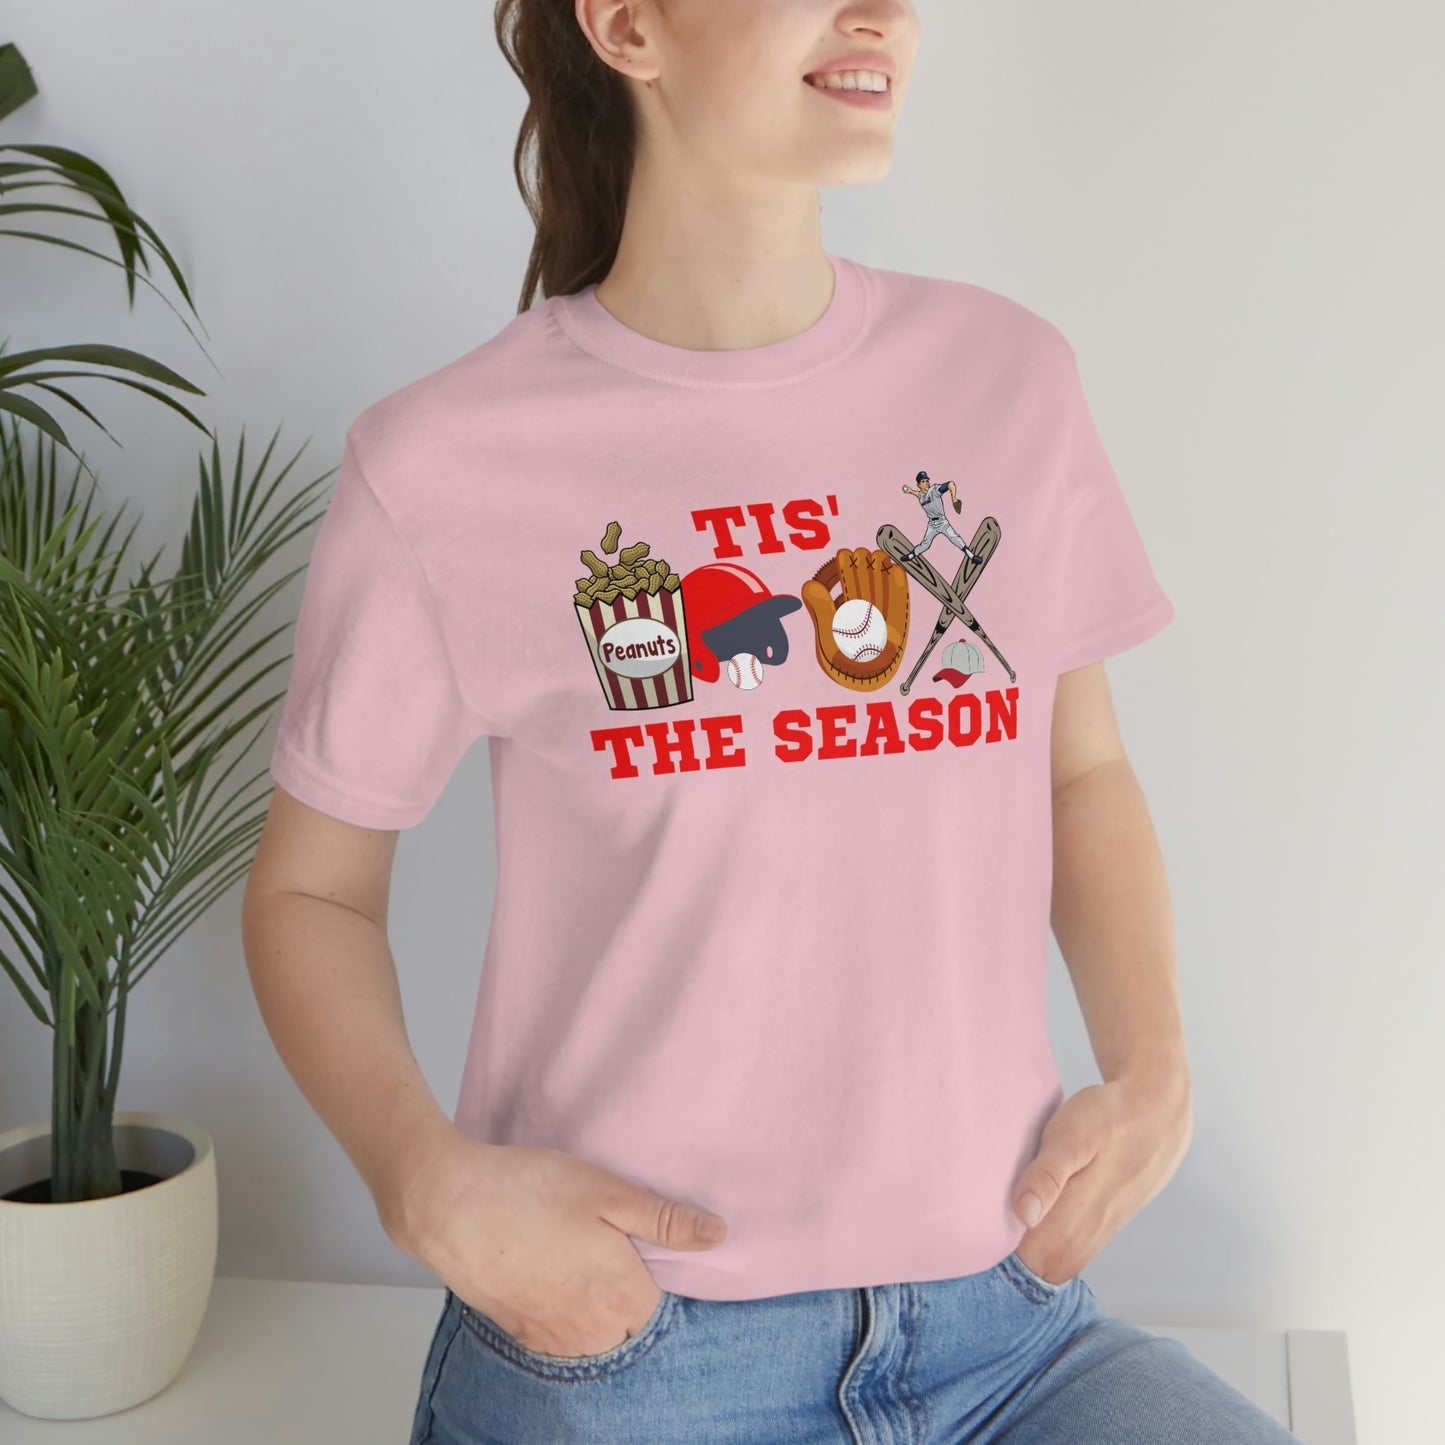 Tis the season Baseball shirt baseball tee baseball tshirt - sport shirt Baseball Mom shirt, Baseball Mama shirt, gift for him gameday shirt